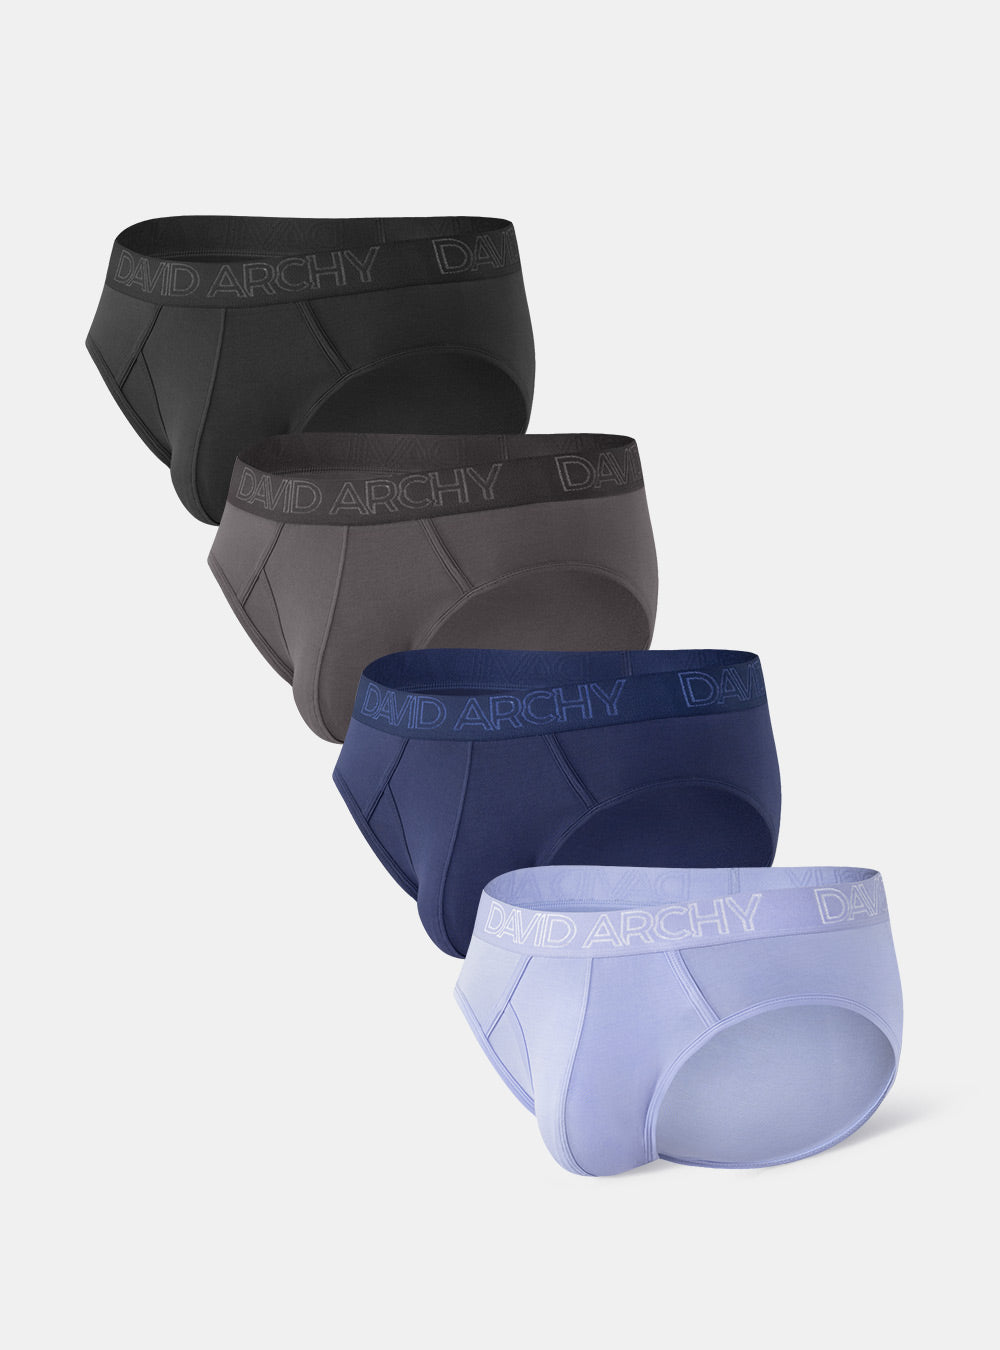 DAVID ARCHY Men's 3 Pack Soft Modal Briefs Breathable Pouch Underwear,  Cotton Modal Blend - Dark Gray/Moonlight Blue/Wine Red, L price in UAE,  UAE